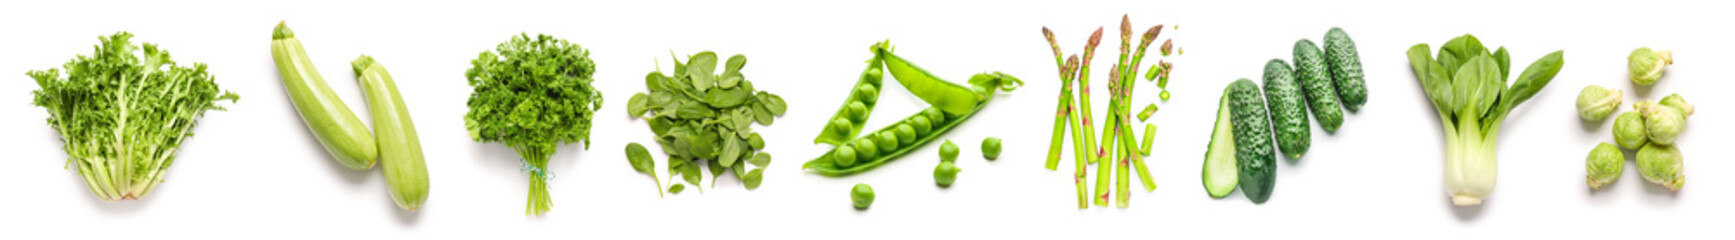 Many green vegetables on white background